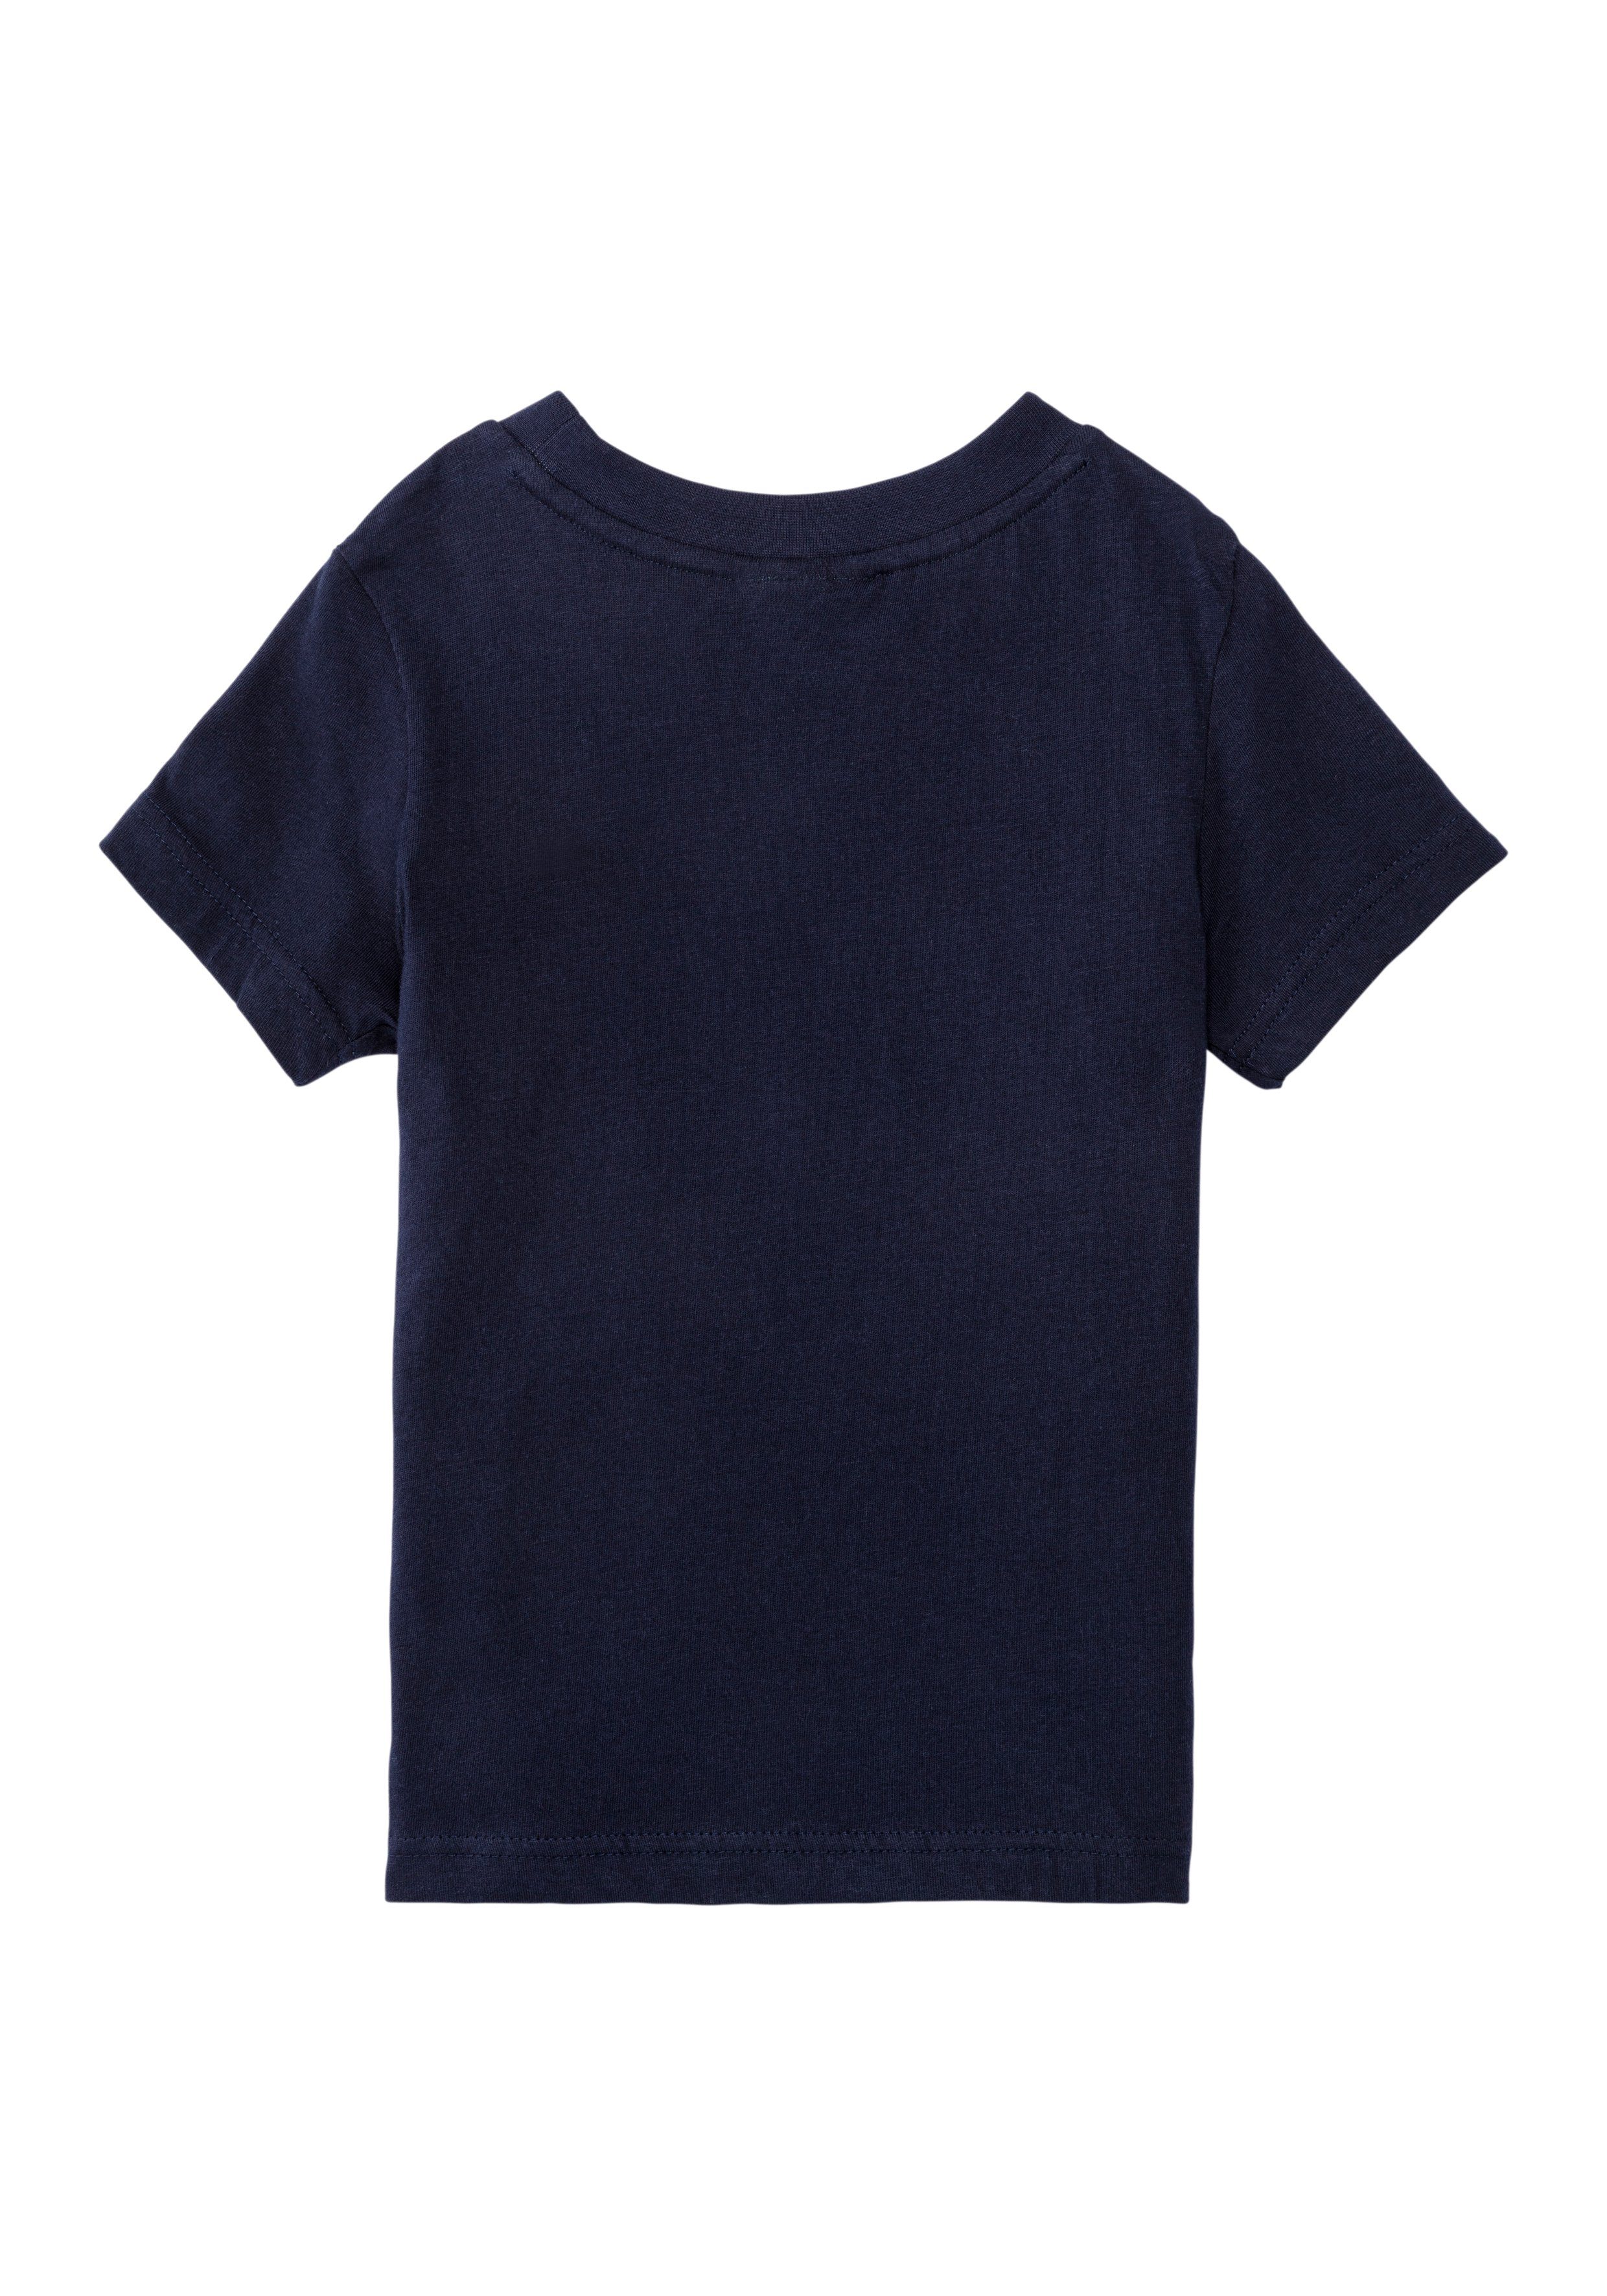 Lacoste T-Shirt BLUE mit Brusthöhe Lacoste-Krokodil NAVY auf